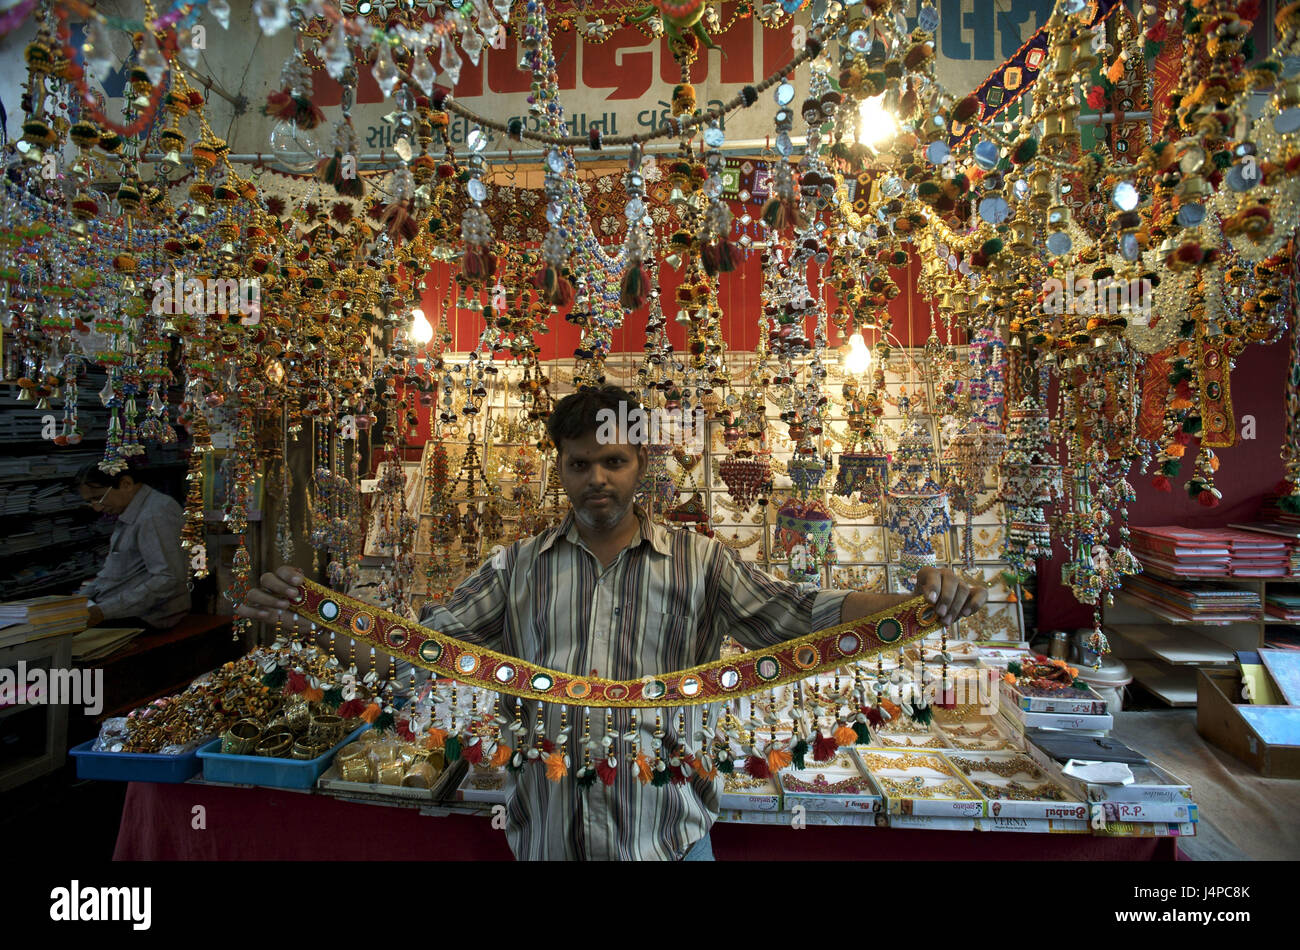 India, Gujarat, Ahmedabad, Manek Chowk, mercato Foto Stock